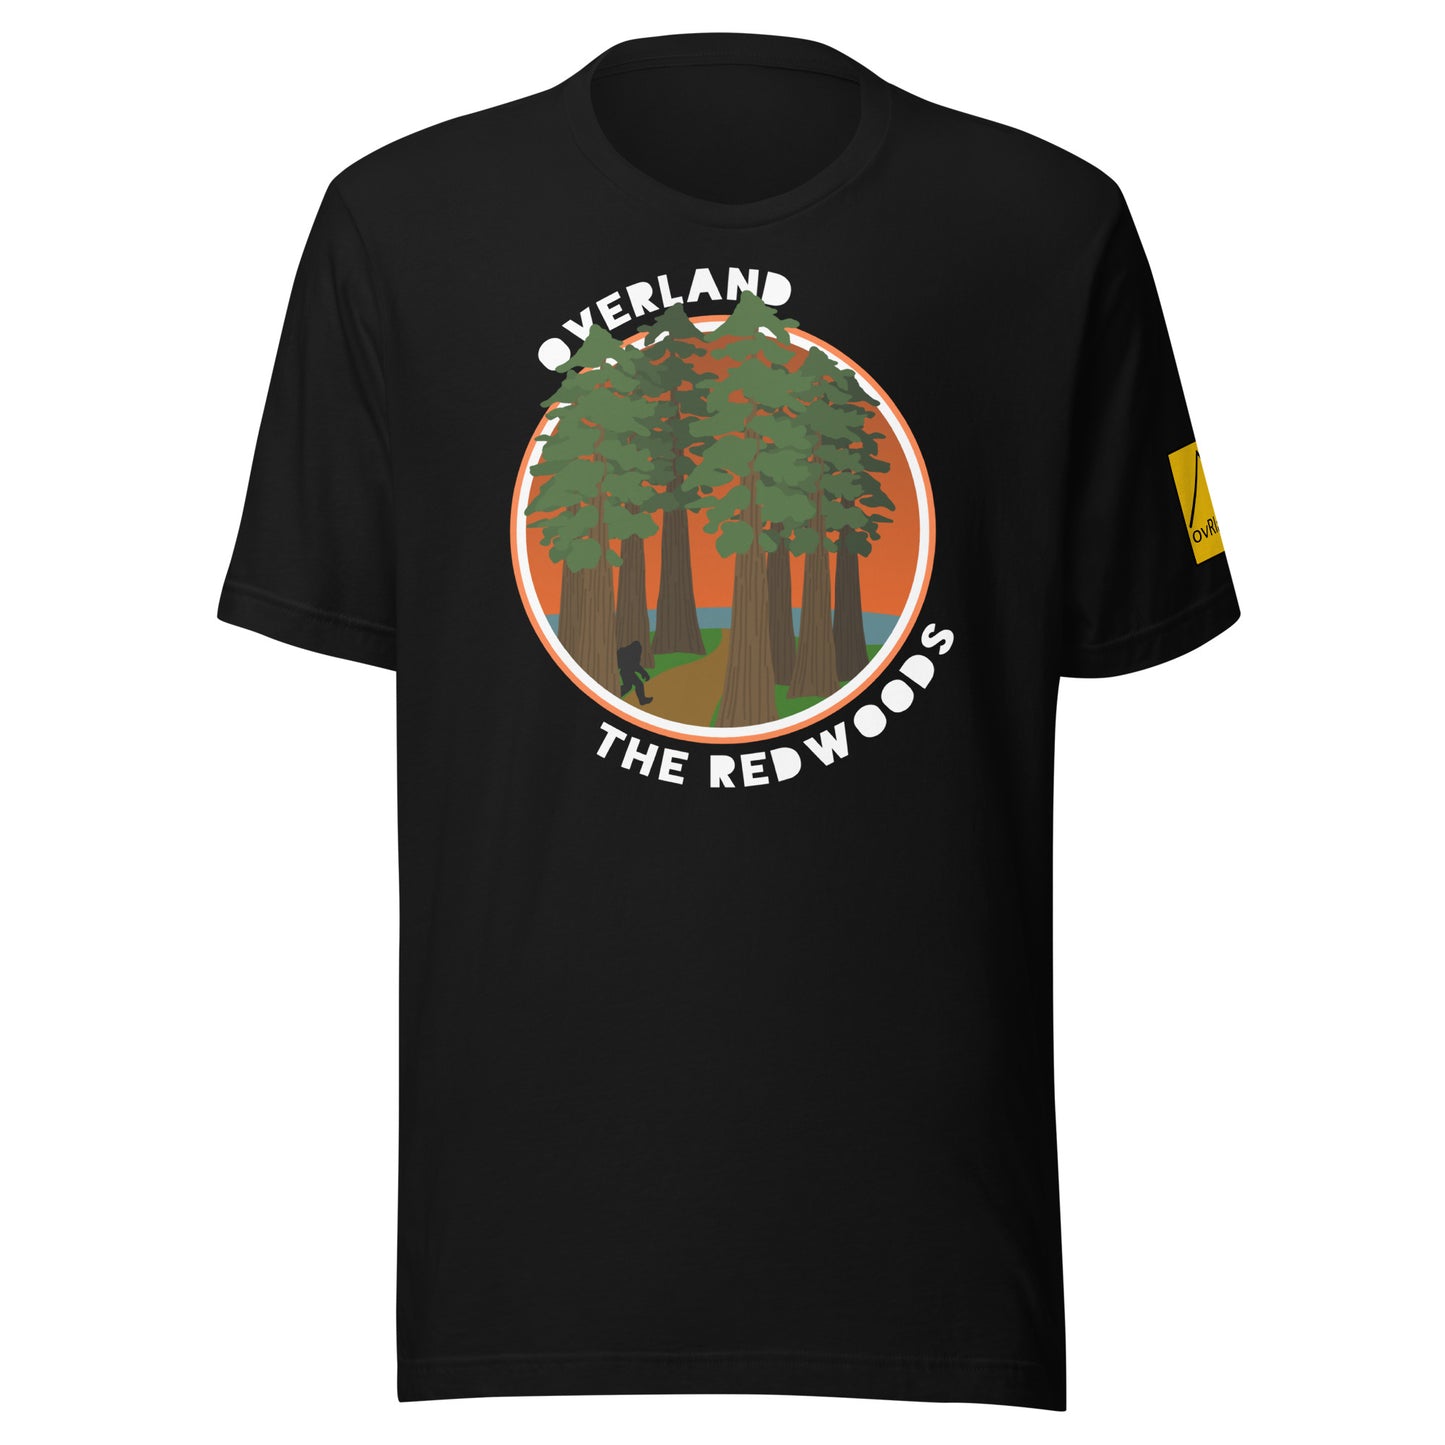 Overland the Redwoods. Bigfoot country. Black t-shirt. overland365.com